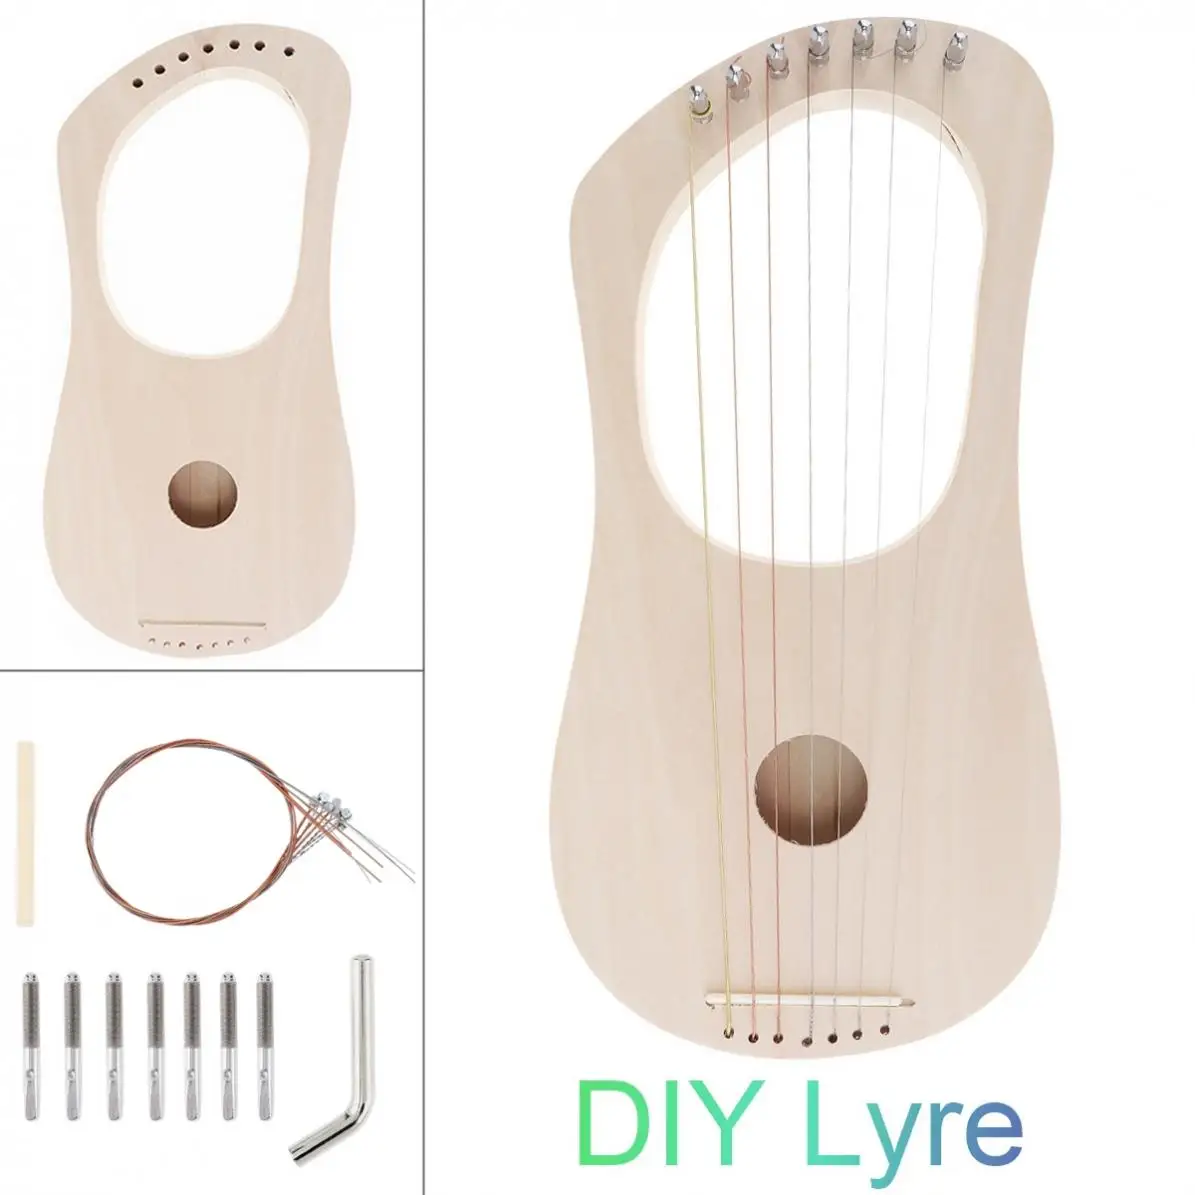 7 Strings Lyre Harp DIY Kit Solid Basswood String Instrument Handwork Painting Assembly for Amateur Beginner Kid Children Fun